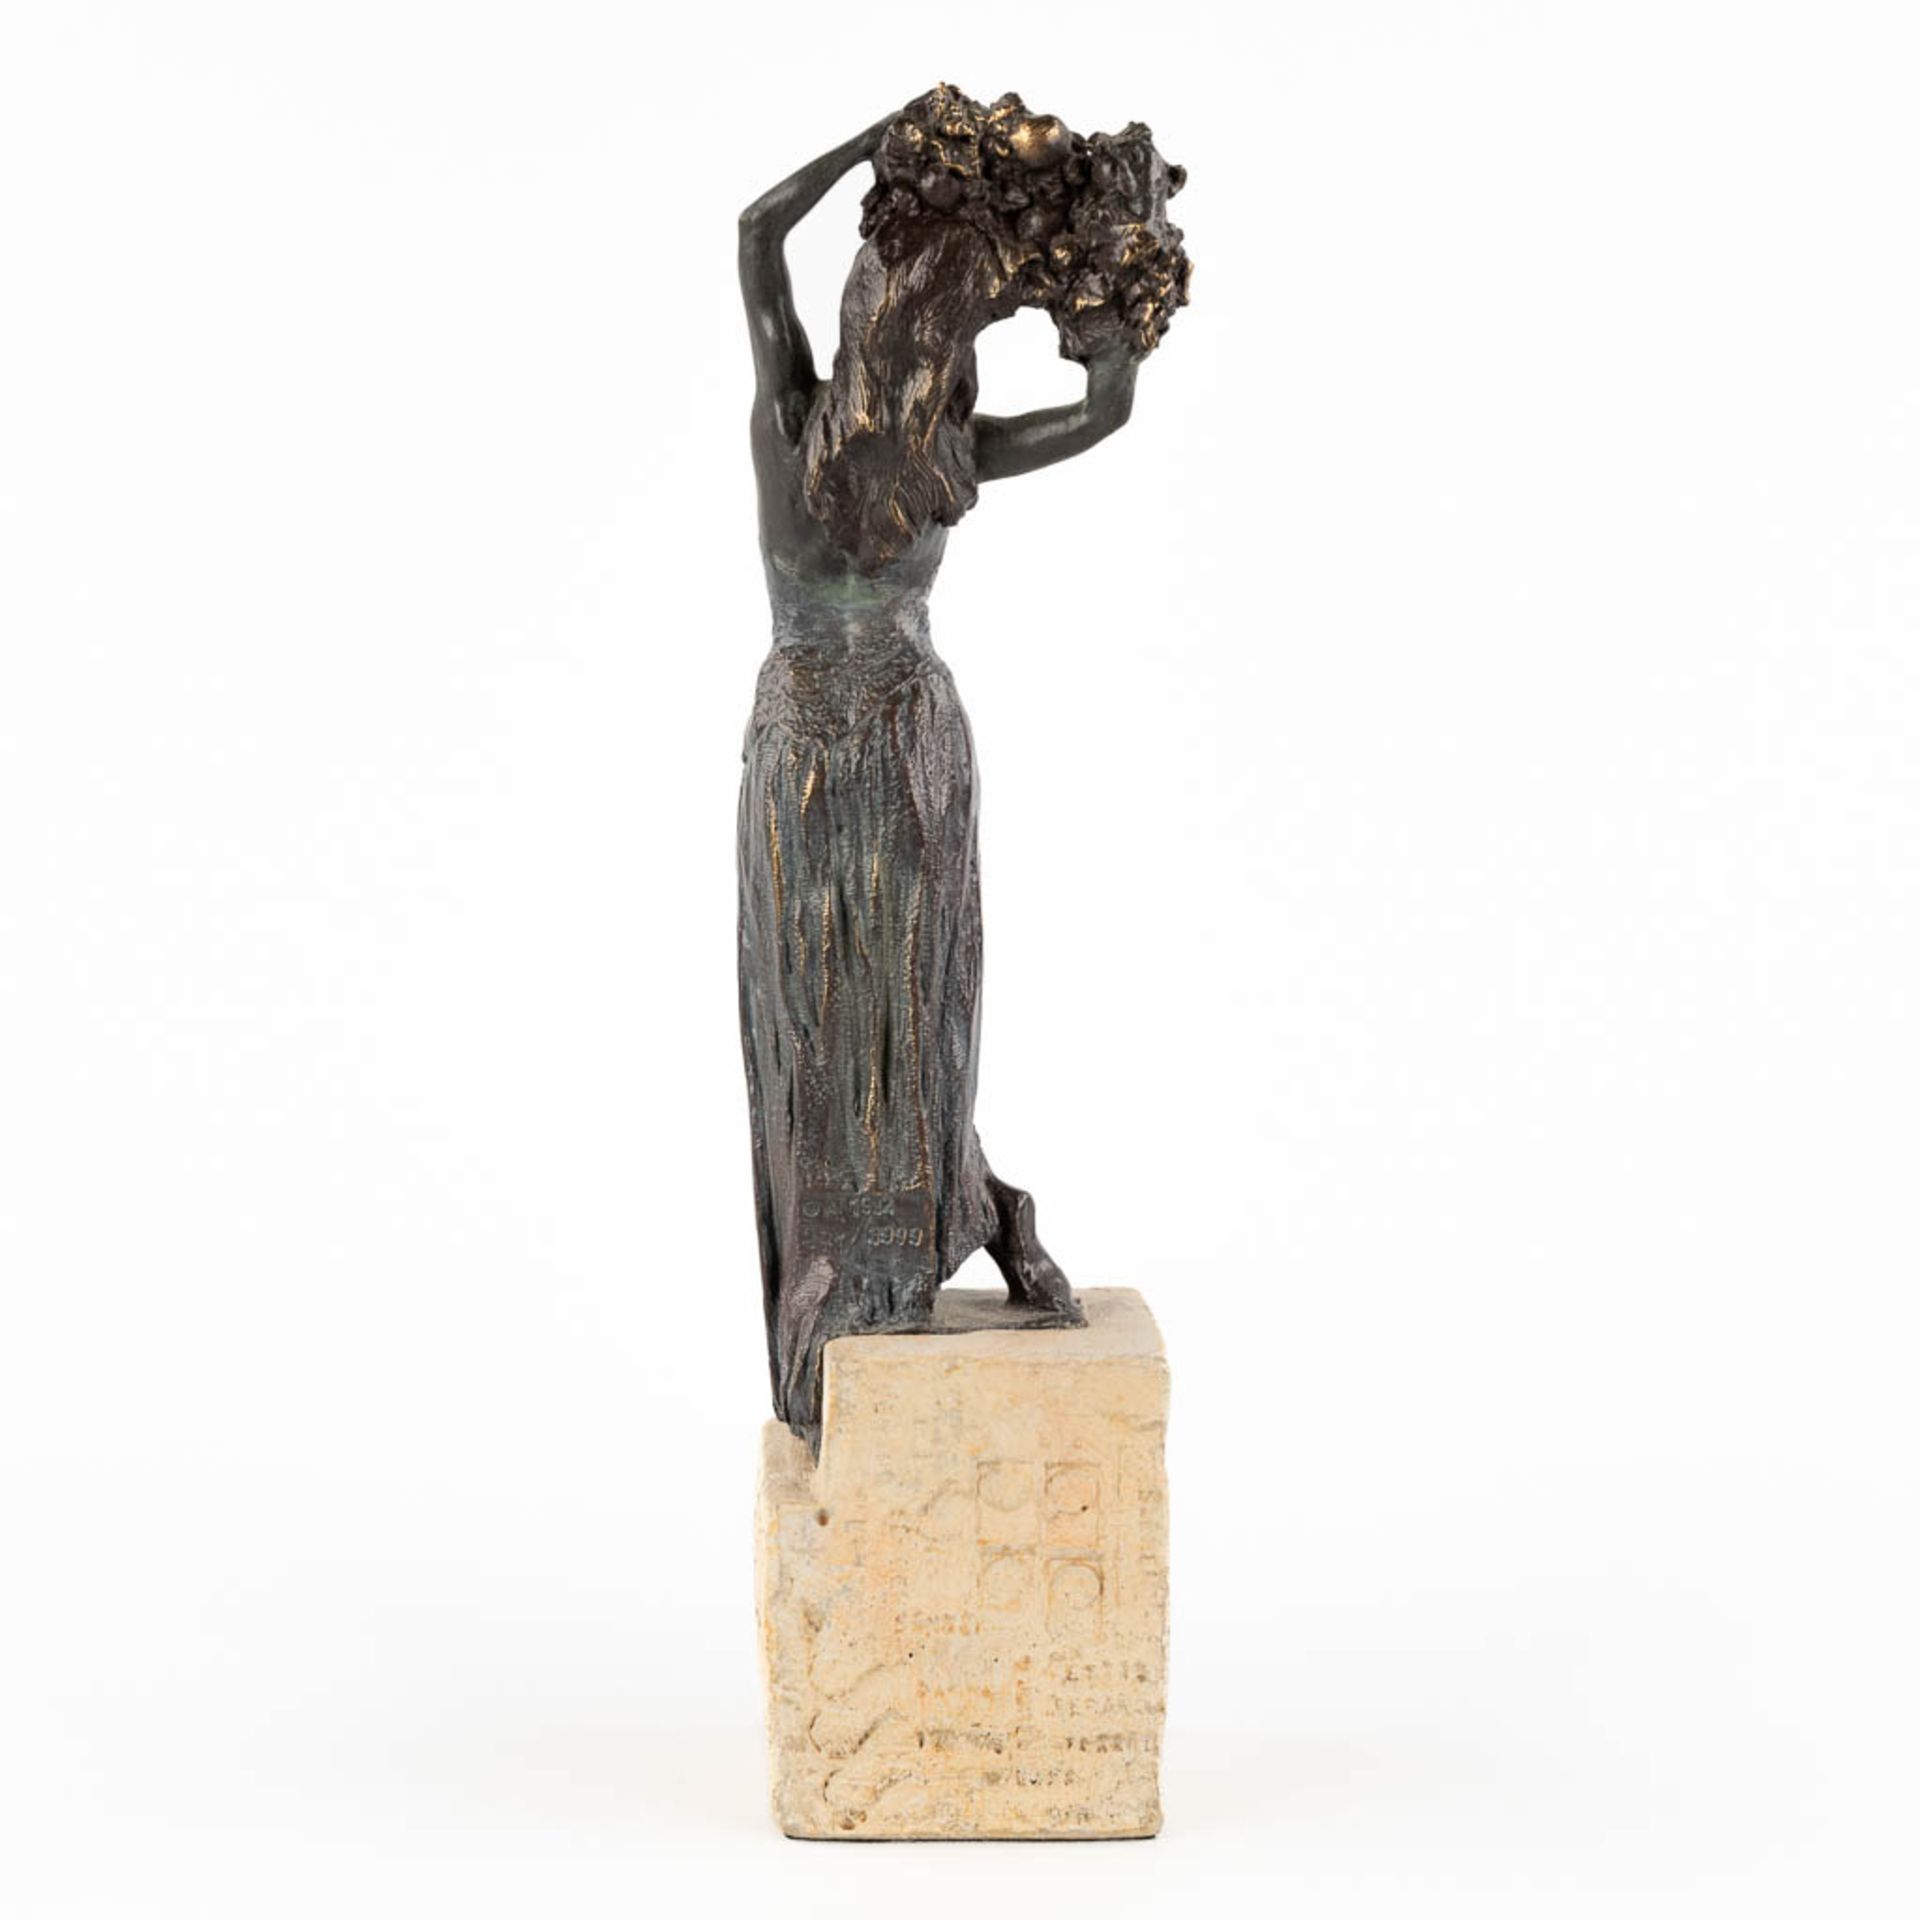 Joan MIRO (1893-1983)(after) 'Verano II' patinated bronze. 271/3999. 1992. (H:24 cm) - Image 5 of 13